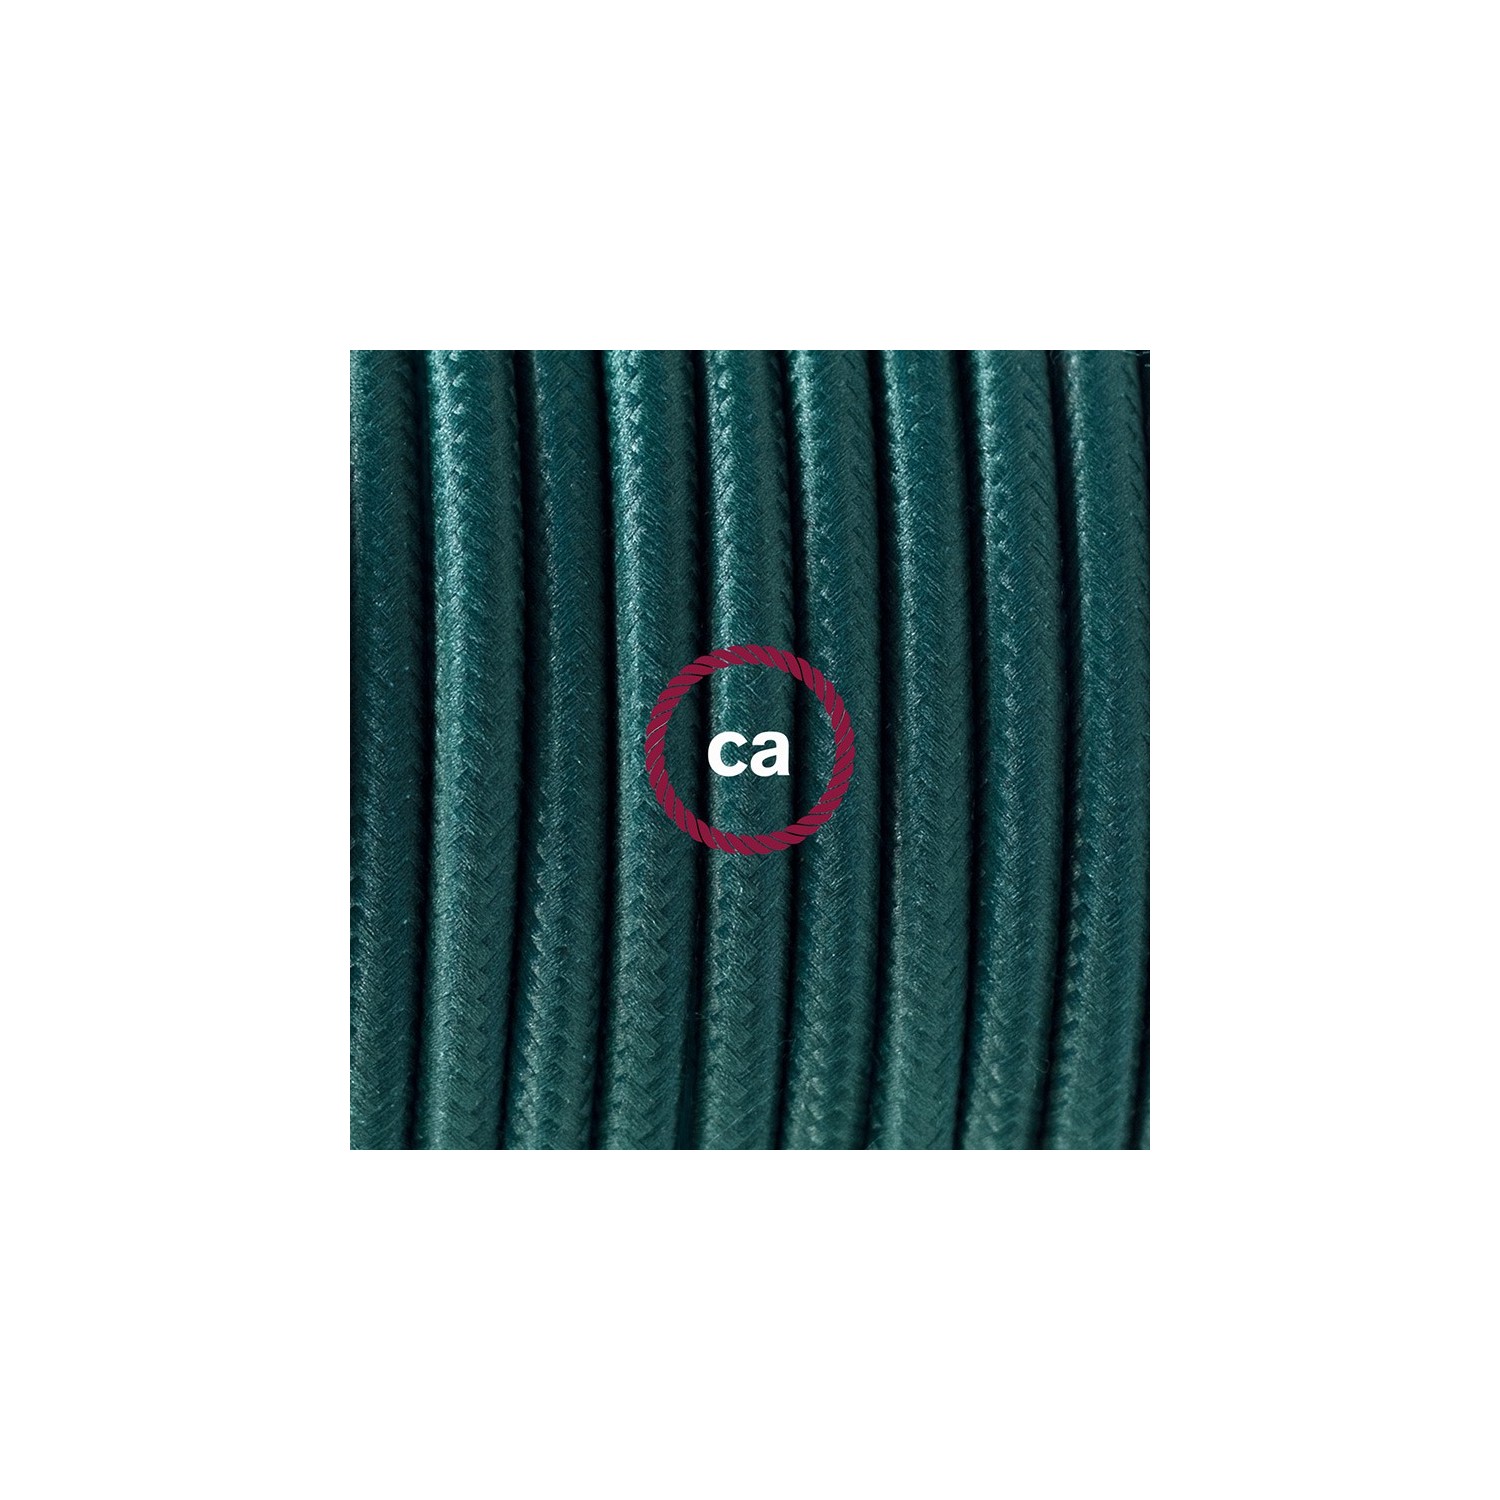 Cabo para candeeiro de chão, RM21 Verde Escuro Seda Artificial 3 m. Escolha a cor da ficha e do interruptor.